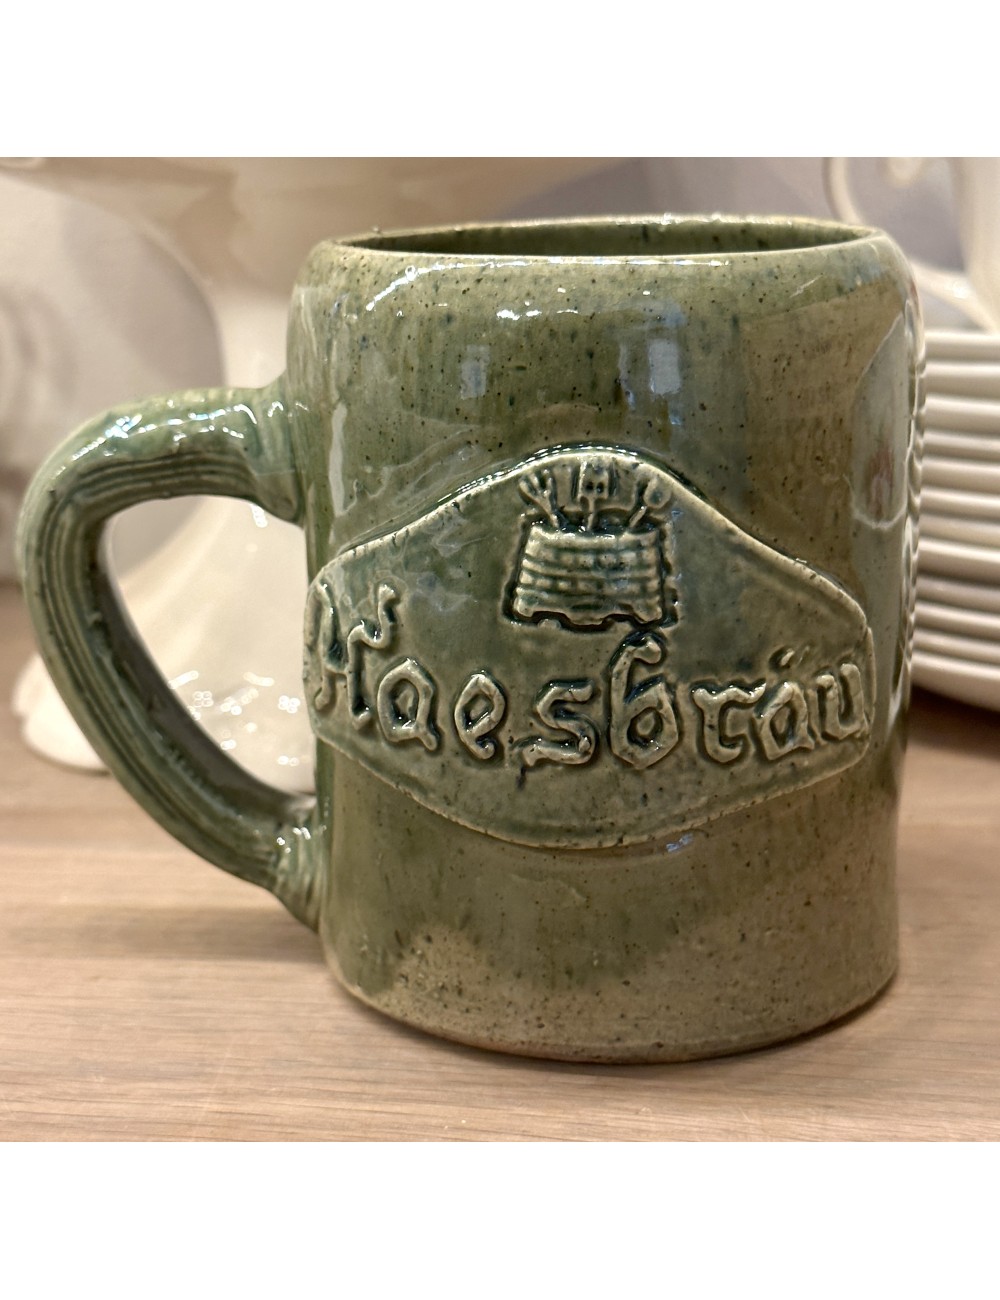 Beer mug - handmade by A. Noseda of Kuurne - marked inside bottom - bright green model